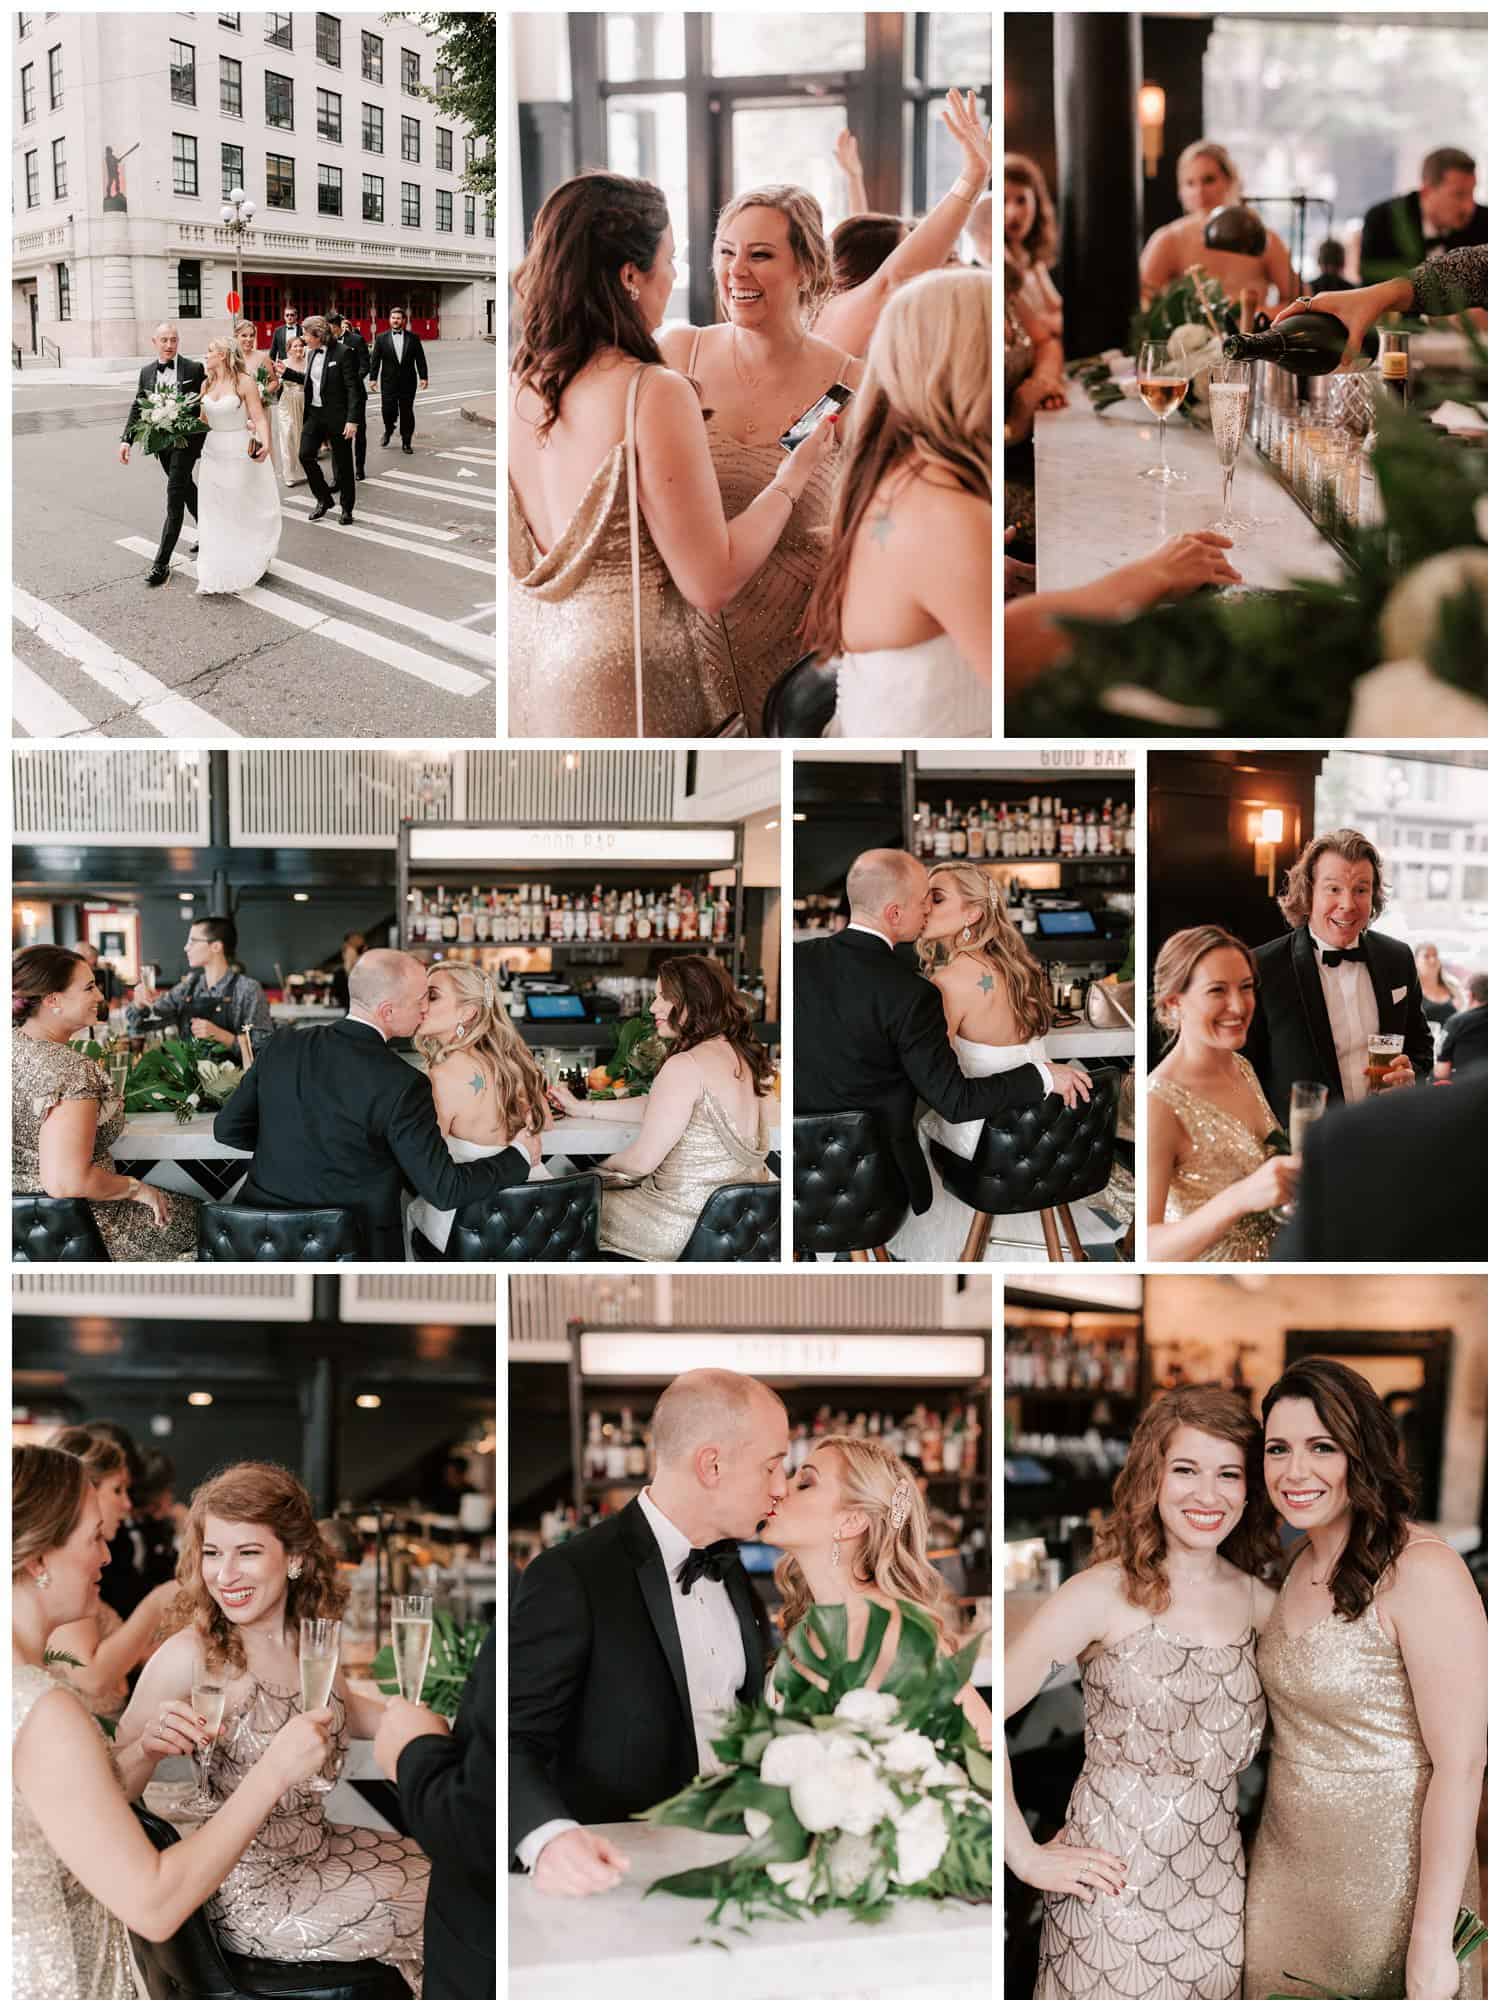 Axis Pioneer Square wedding photos by Seattle wedding photographer Luma Weddings